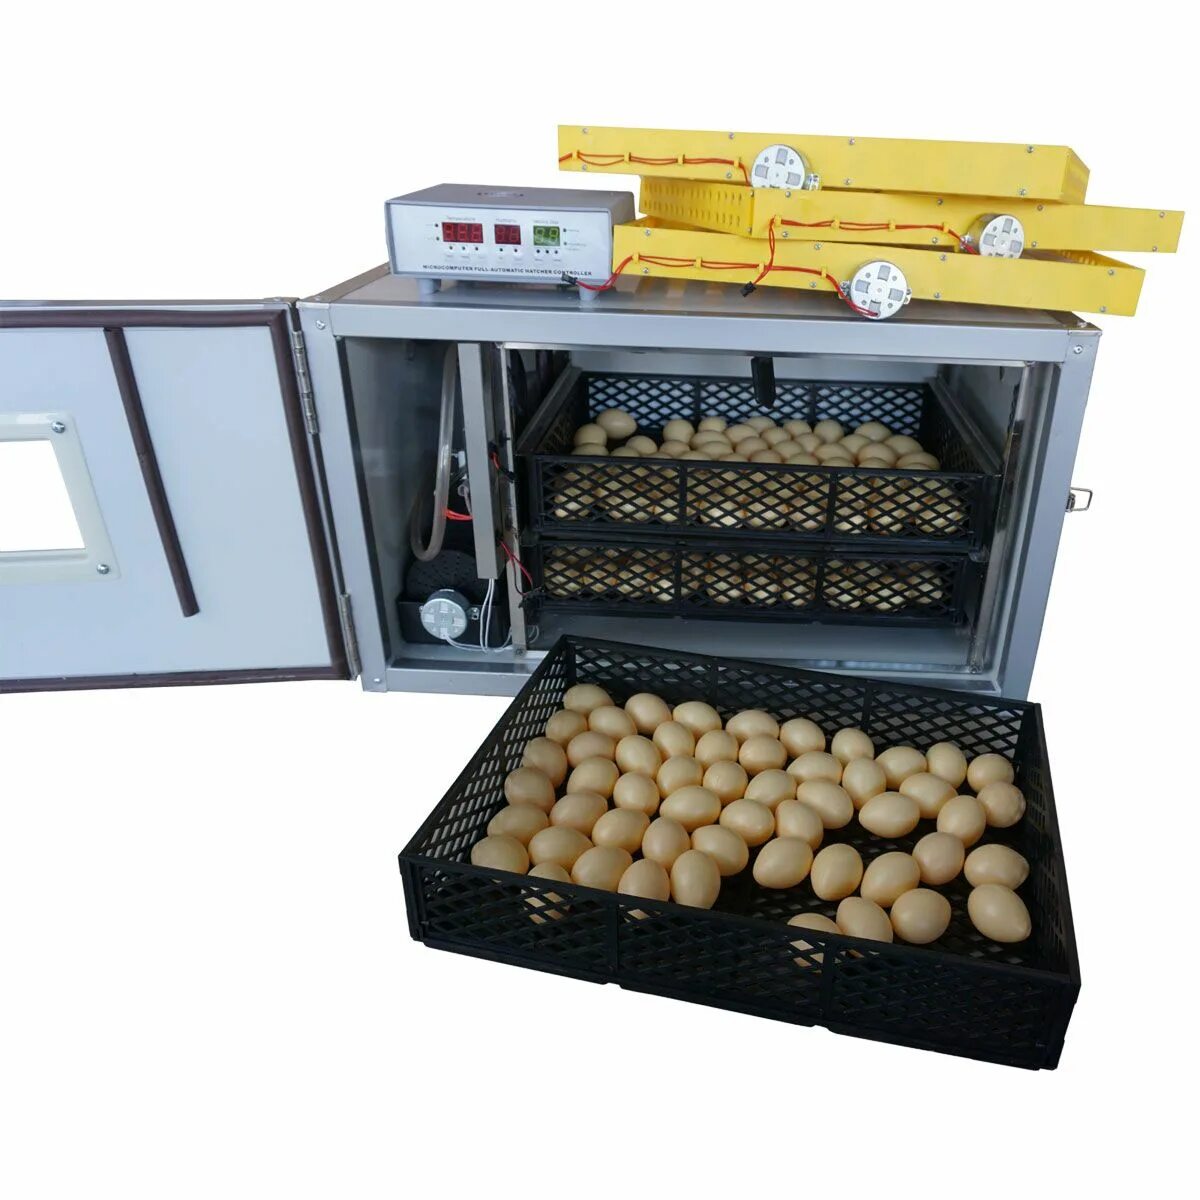 Автоматический переворот яиц в инкубаторе. Инкубатор для яиц FHQ-MN-24/56 Intelligent incubator Controller. Инкубатор FHQ-MN-24/56. Инкубатор для яиц FHQ-MN-24/56. Автоматический инкубатор FHQ-24/26.